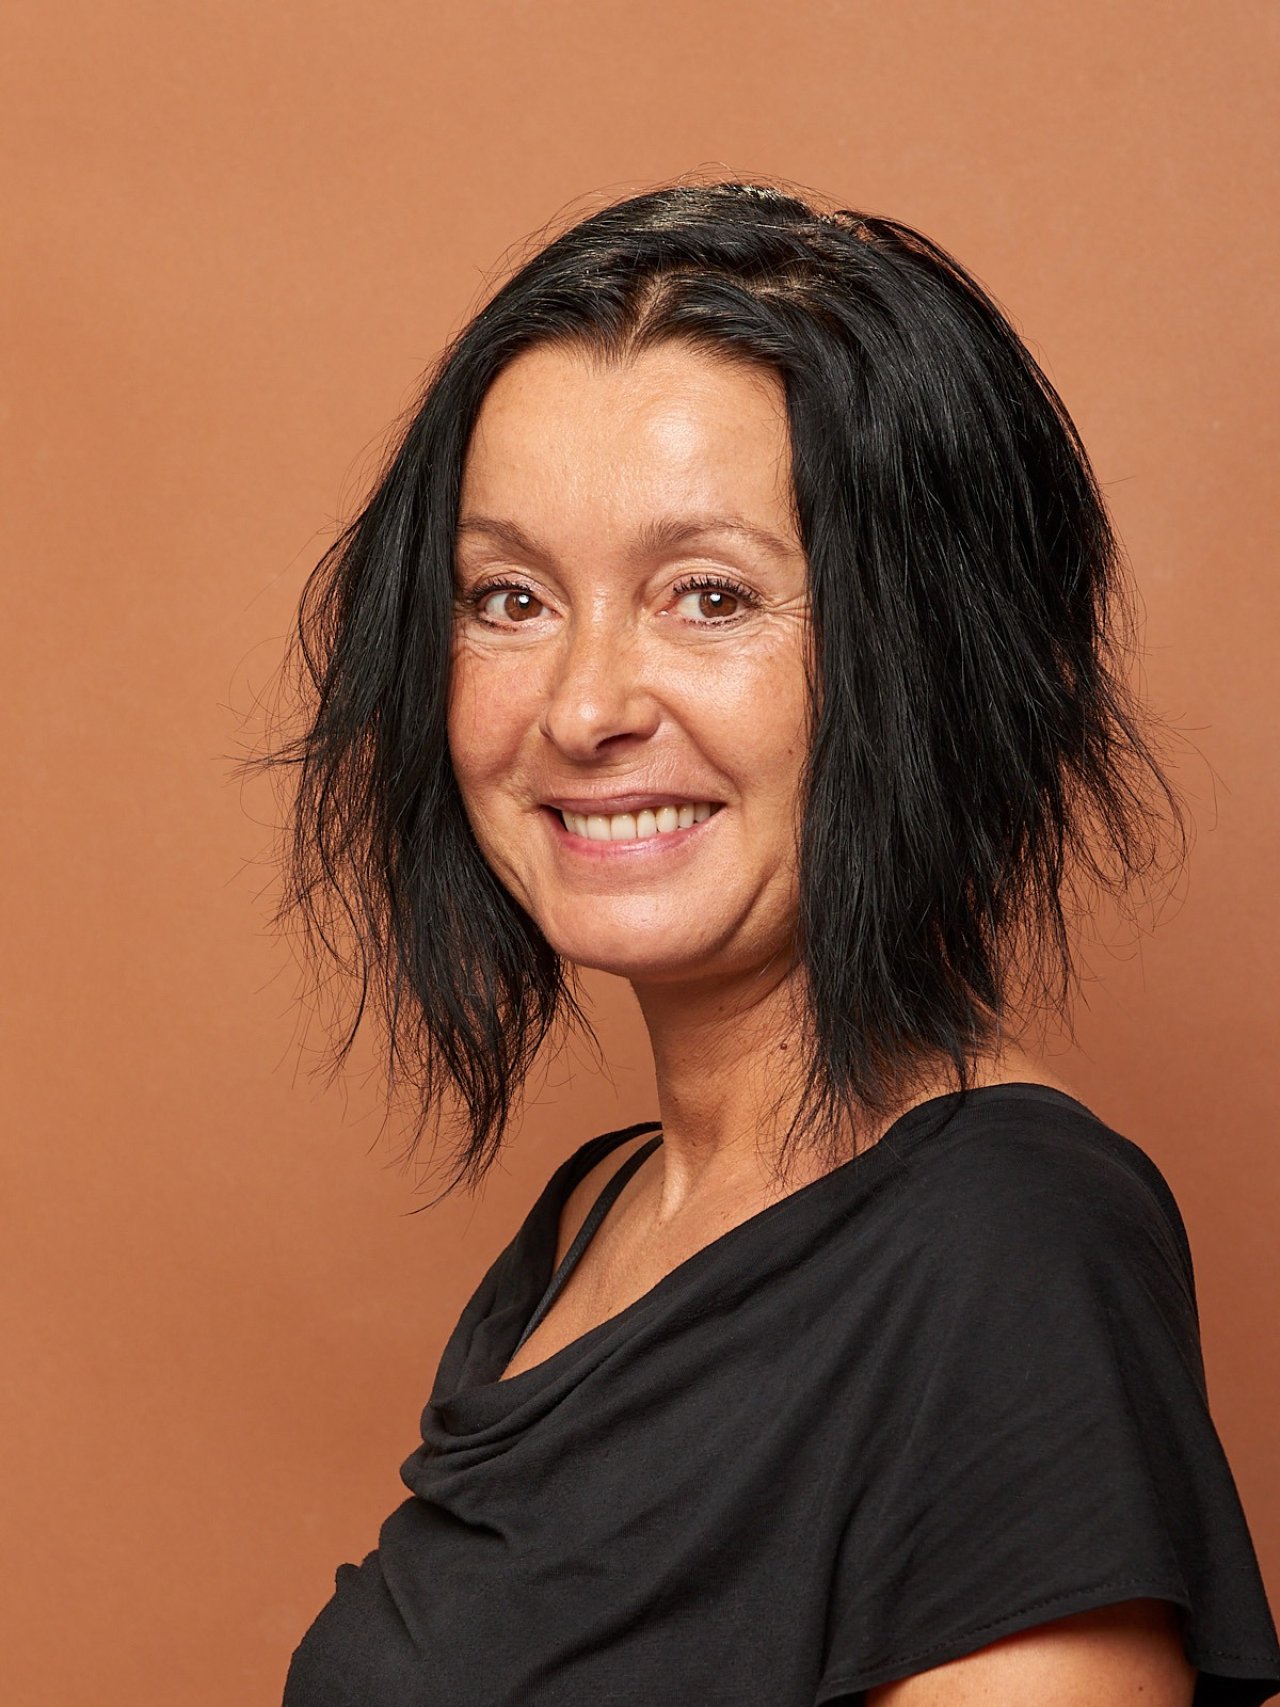 Céline Sohier